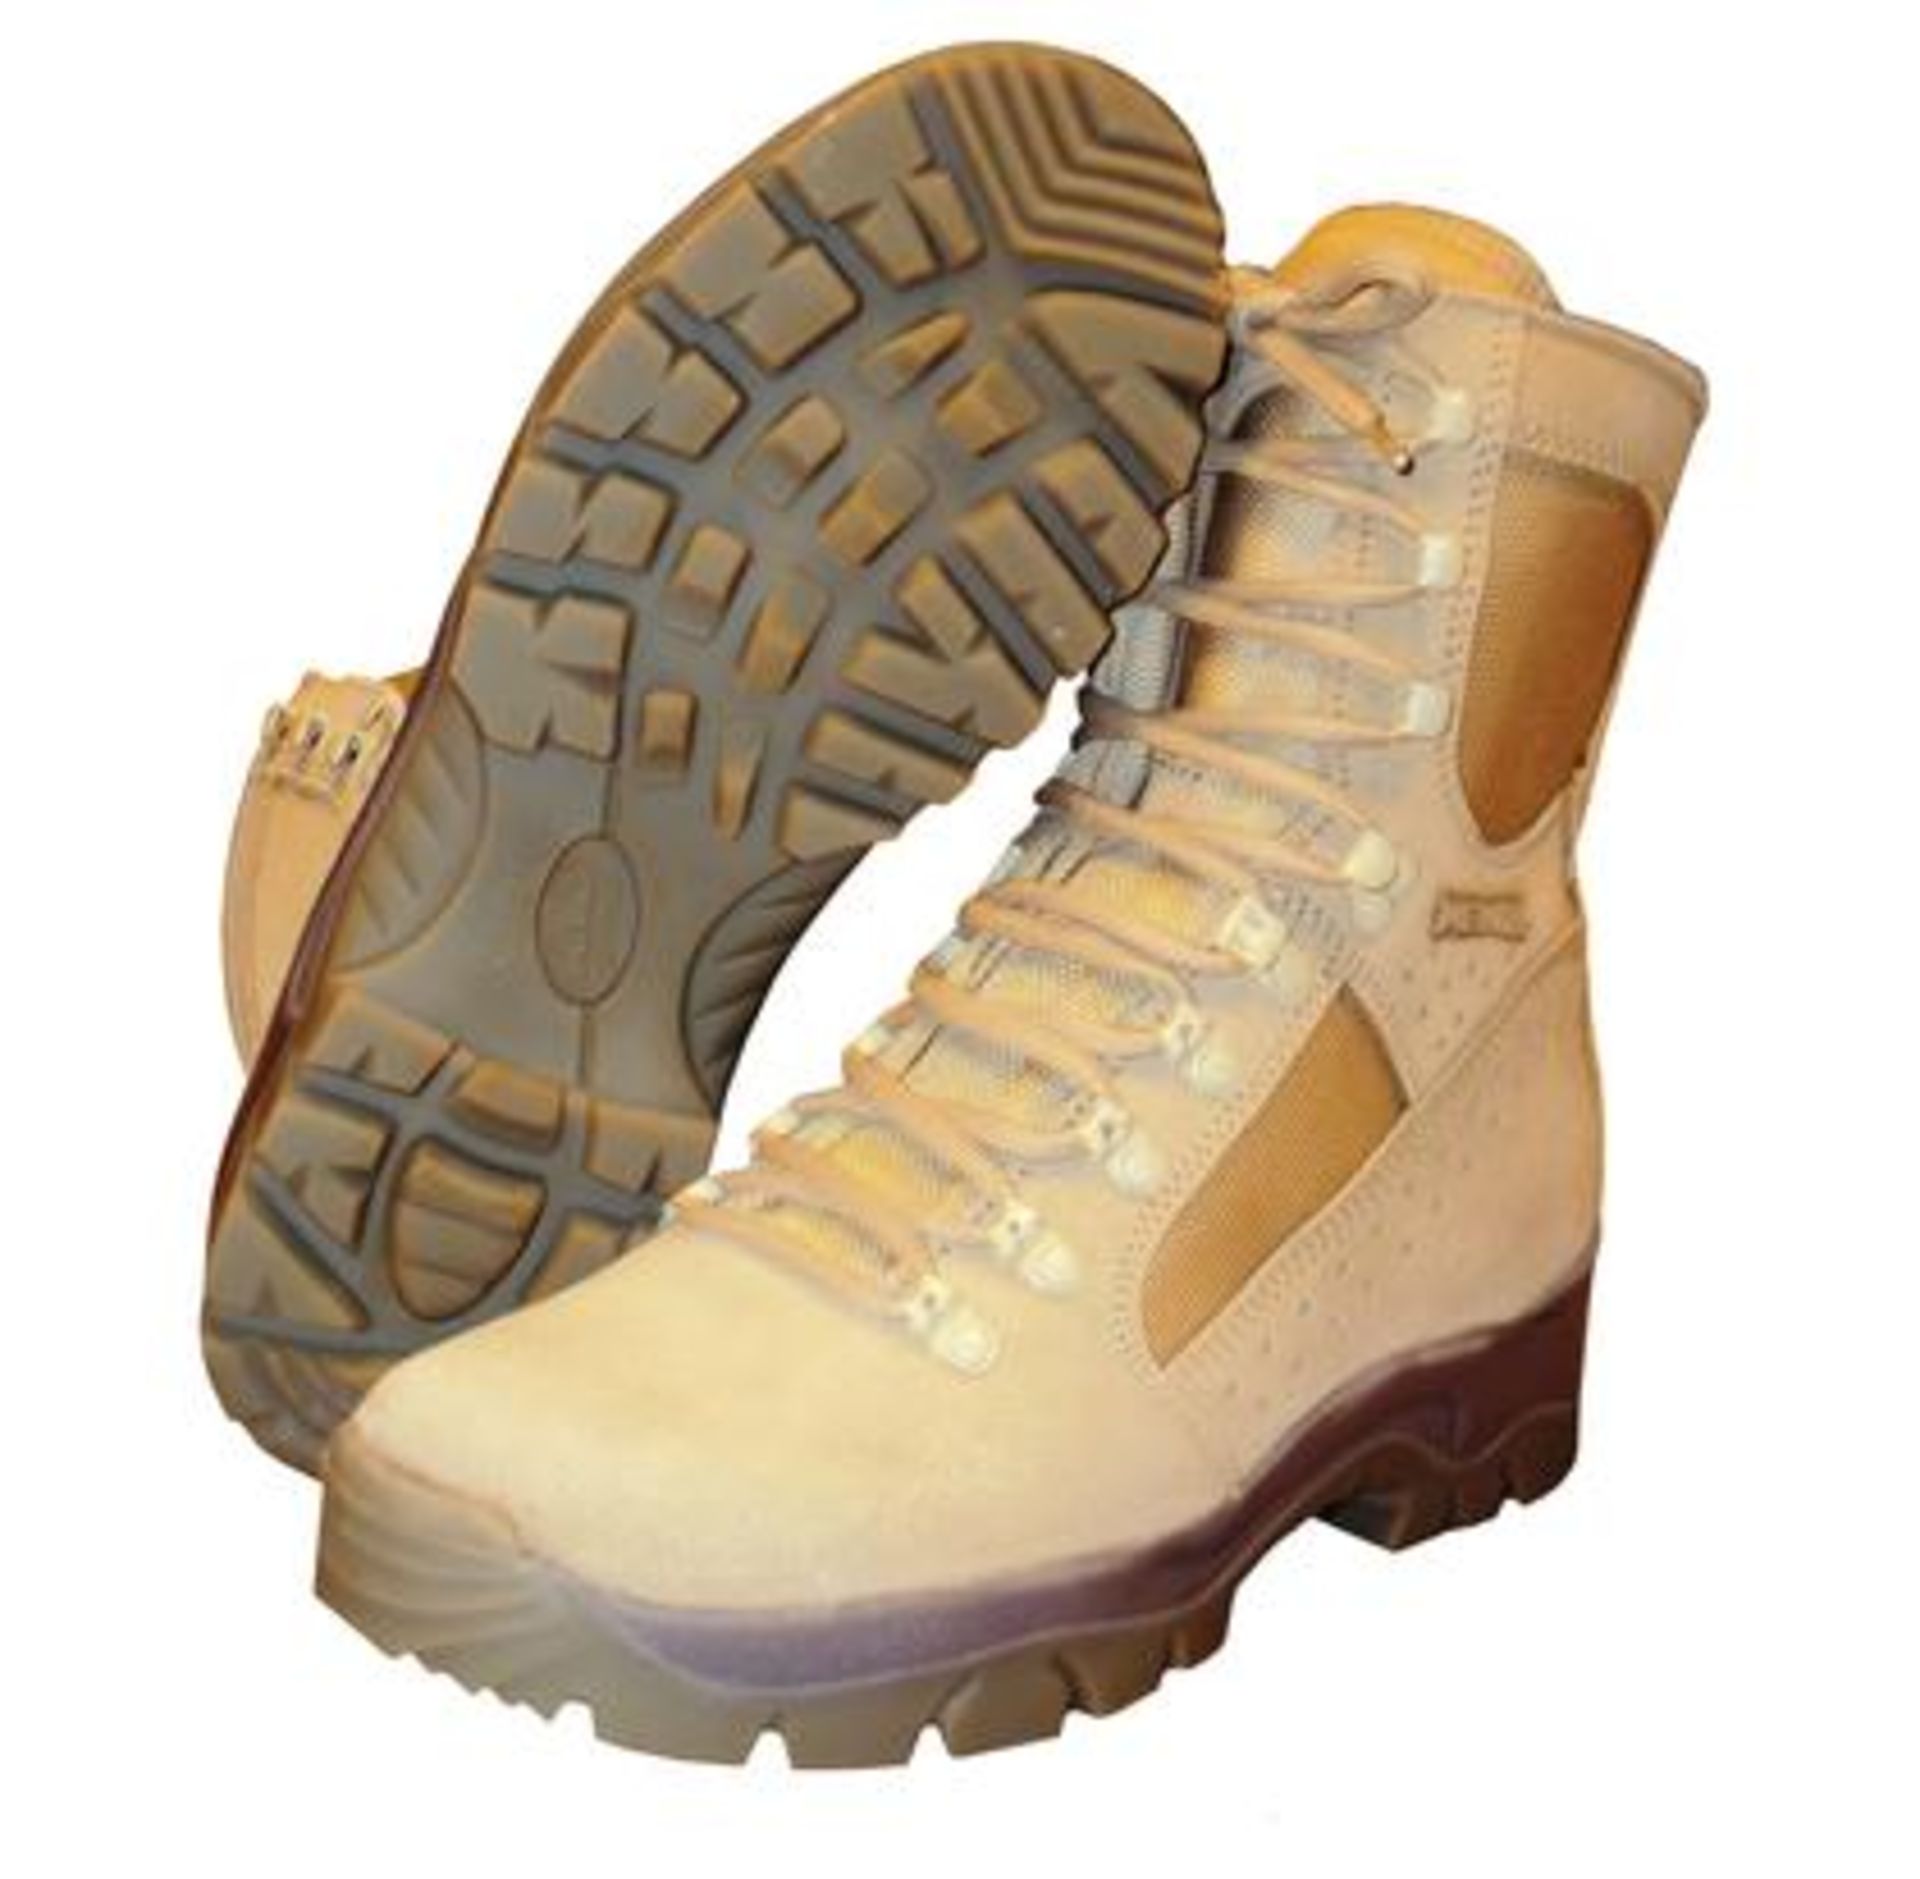 Pack of 5 - Meindl Desert Fox Boots - UK Size 8.5 - Brand New